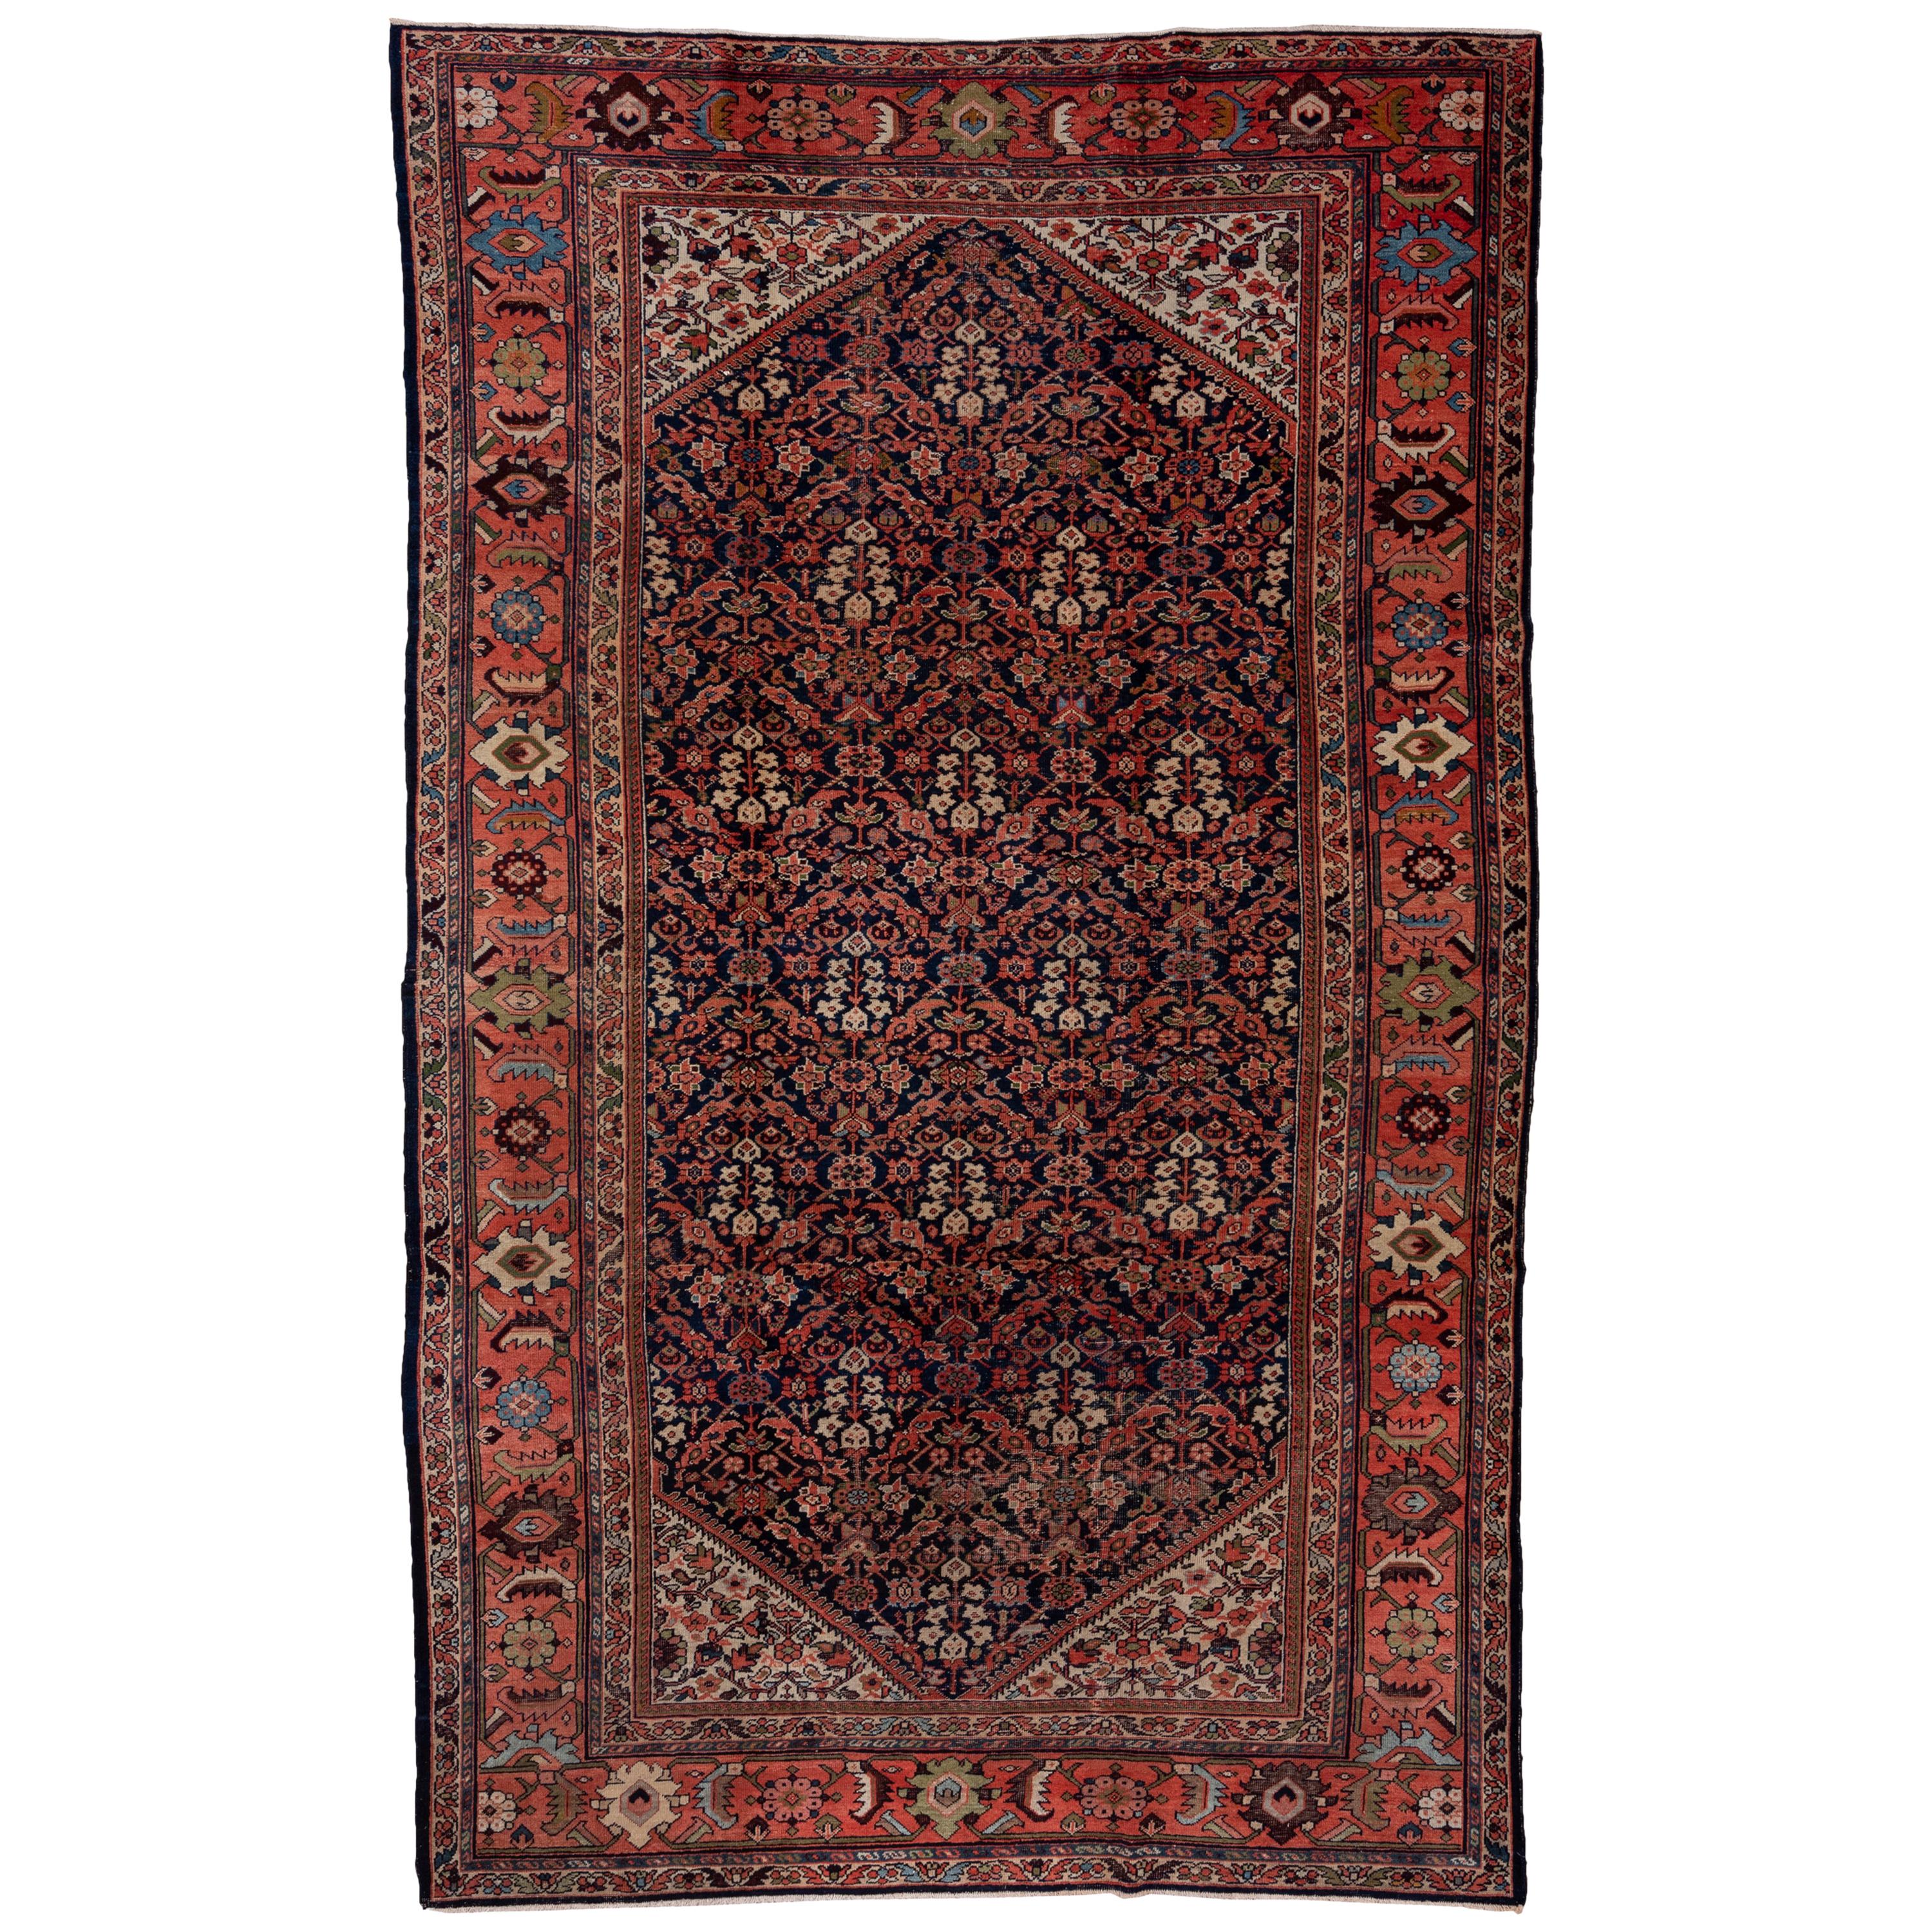 Antique Persian Tribal Farahan Carpet, Circa 1920s